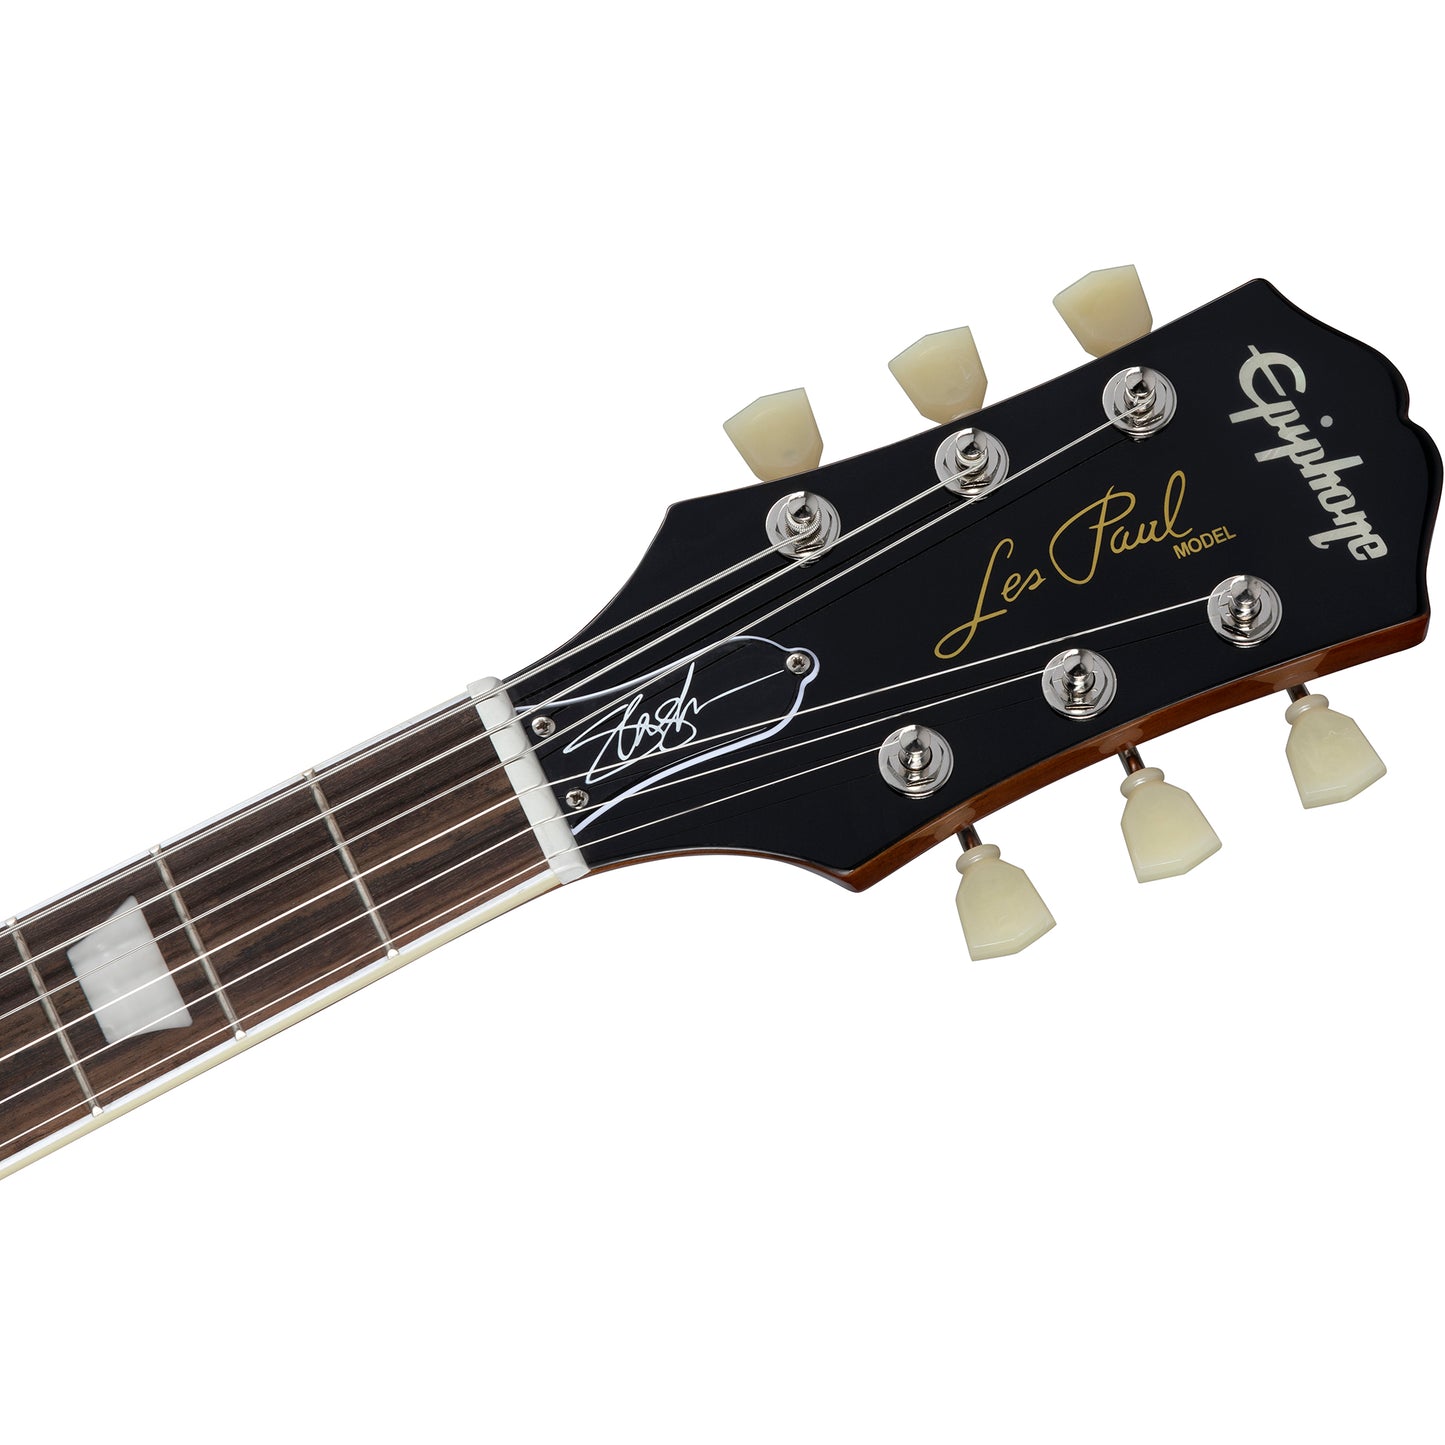 Epiphone Slash “Victoria” Les Paul Standard Gold Top Electric Guitar